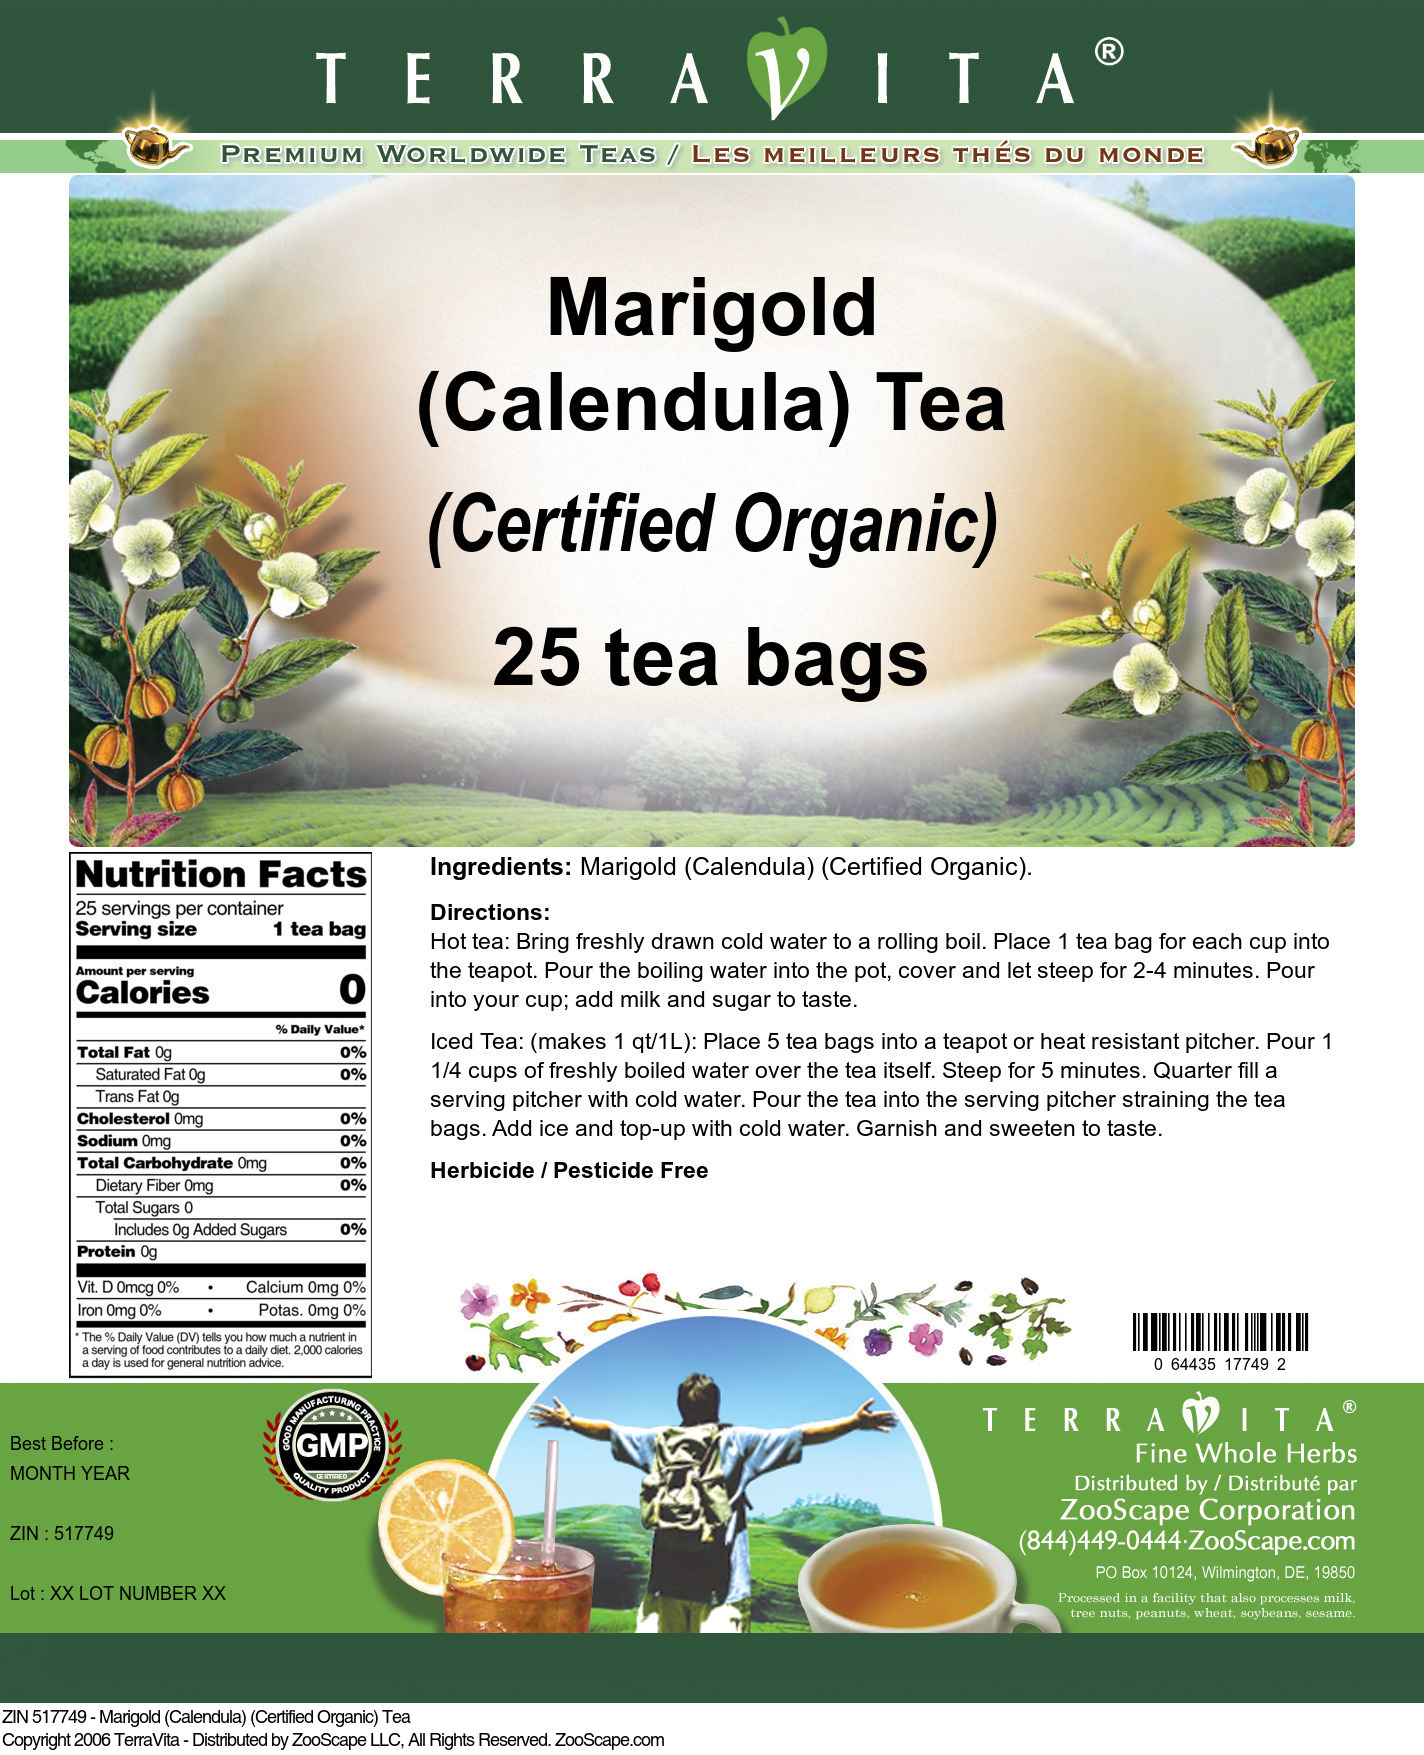 Marigold (Calendula) (Certified Organic) Tea - Label